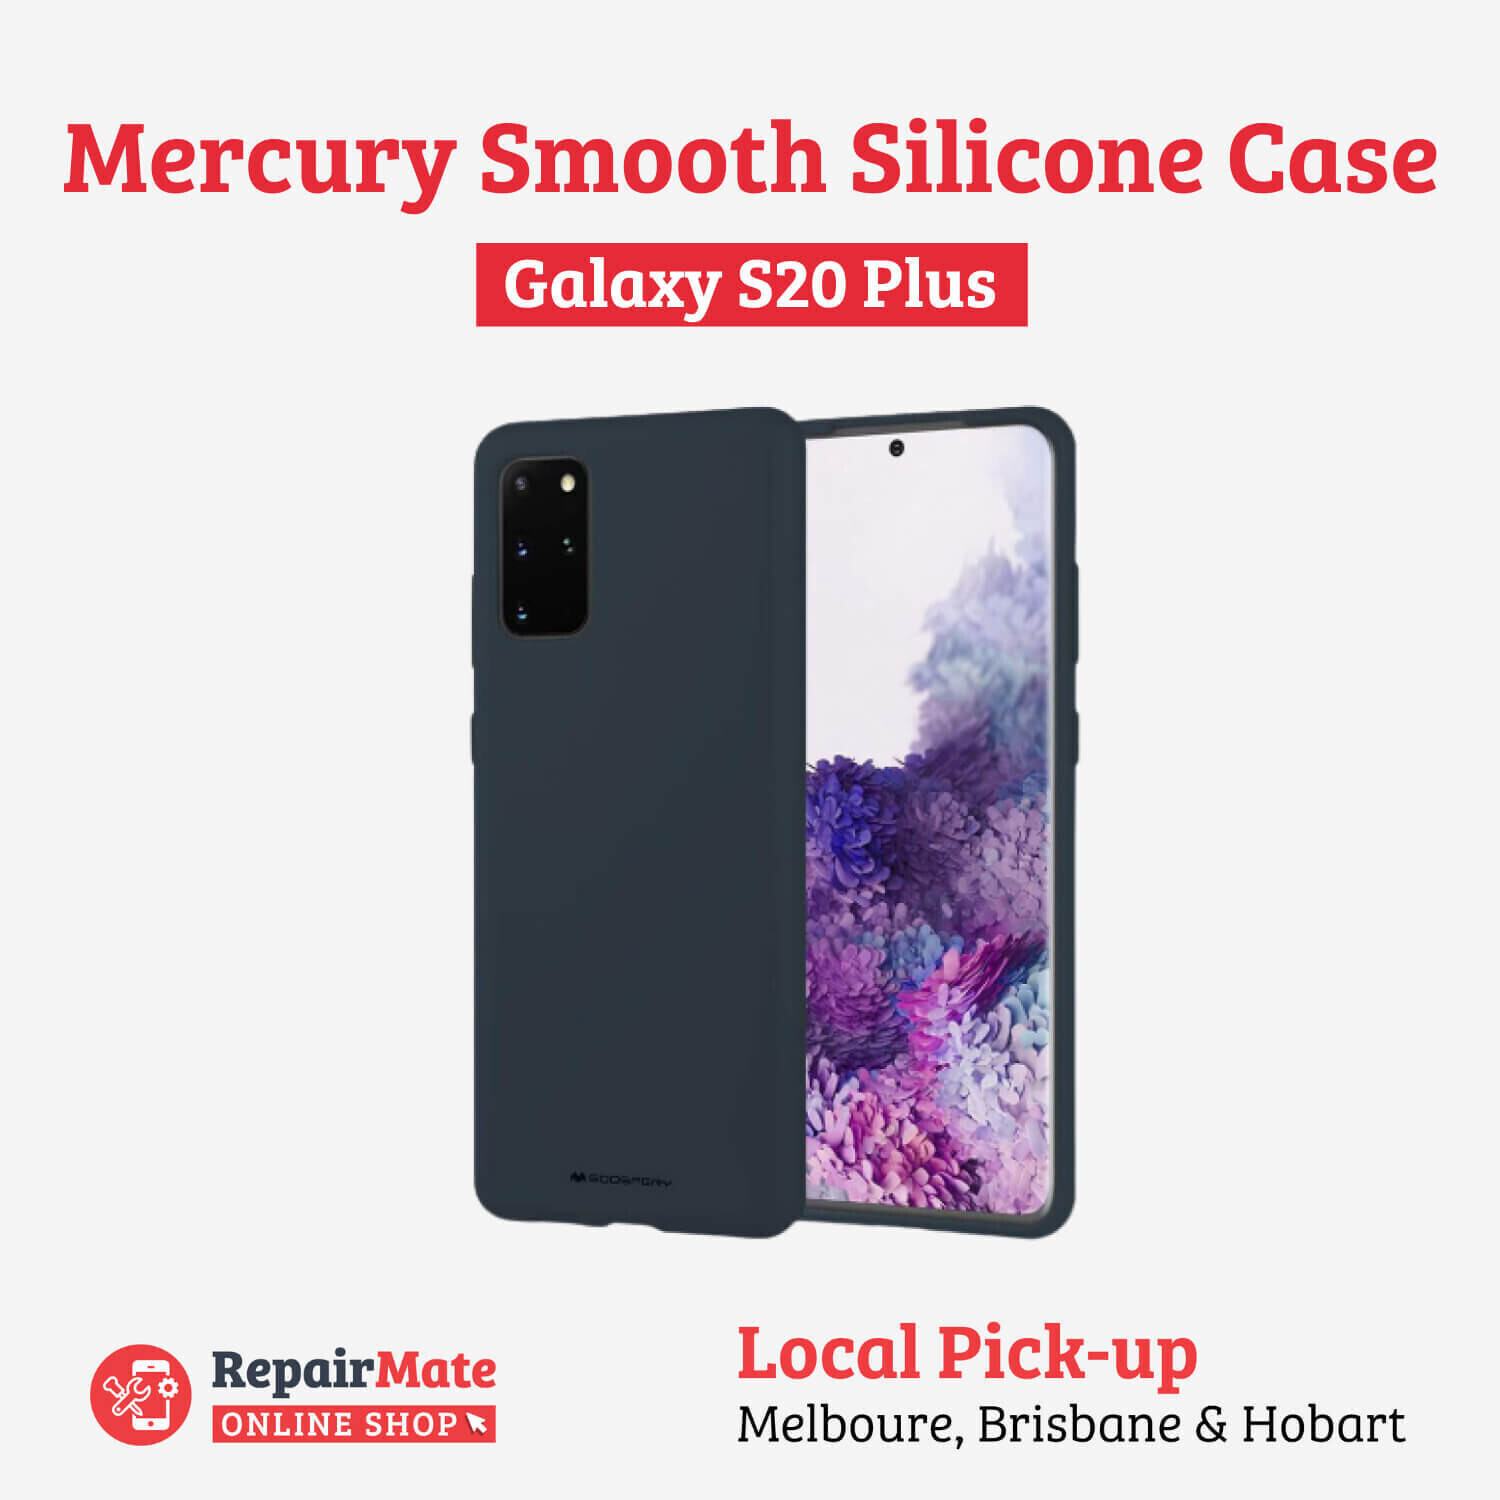 Samsung Galaxy S20 Plus Mercury Smooth Silicone Case